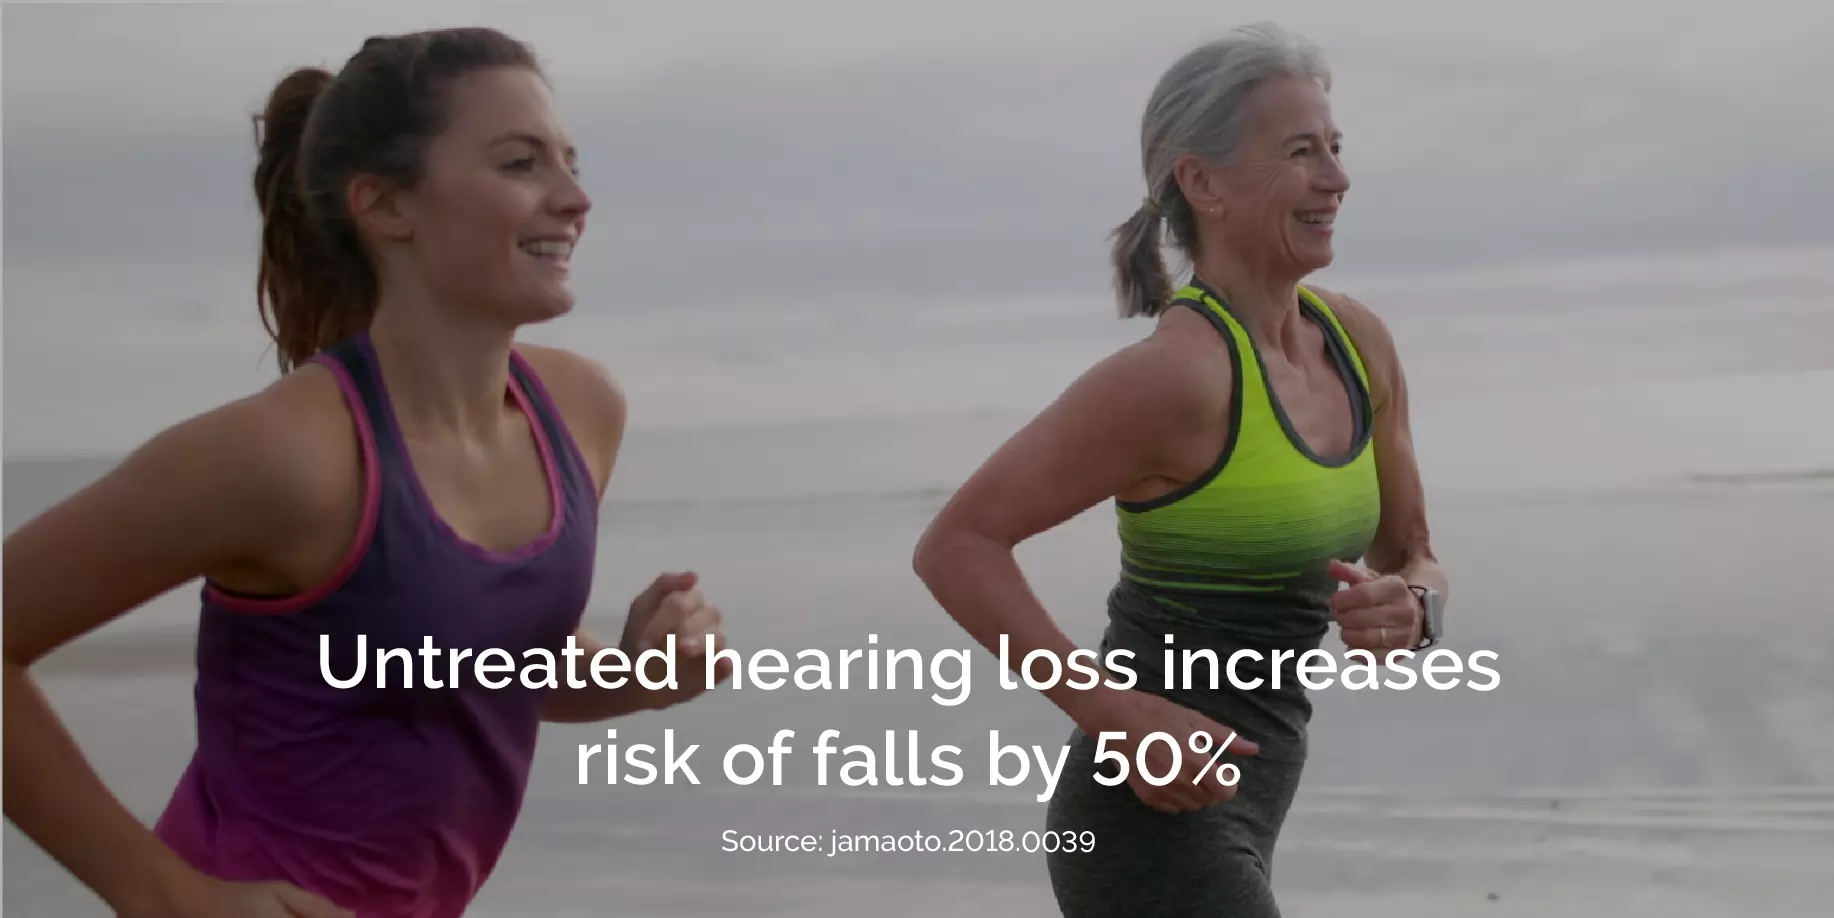 Hearing loss risks falls